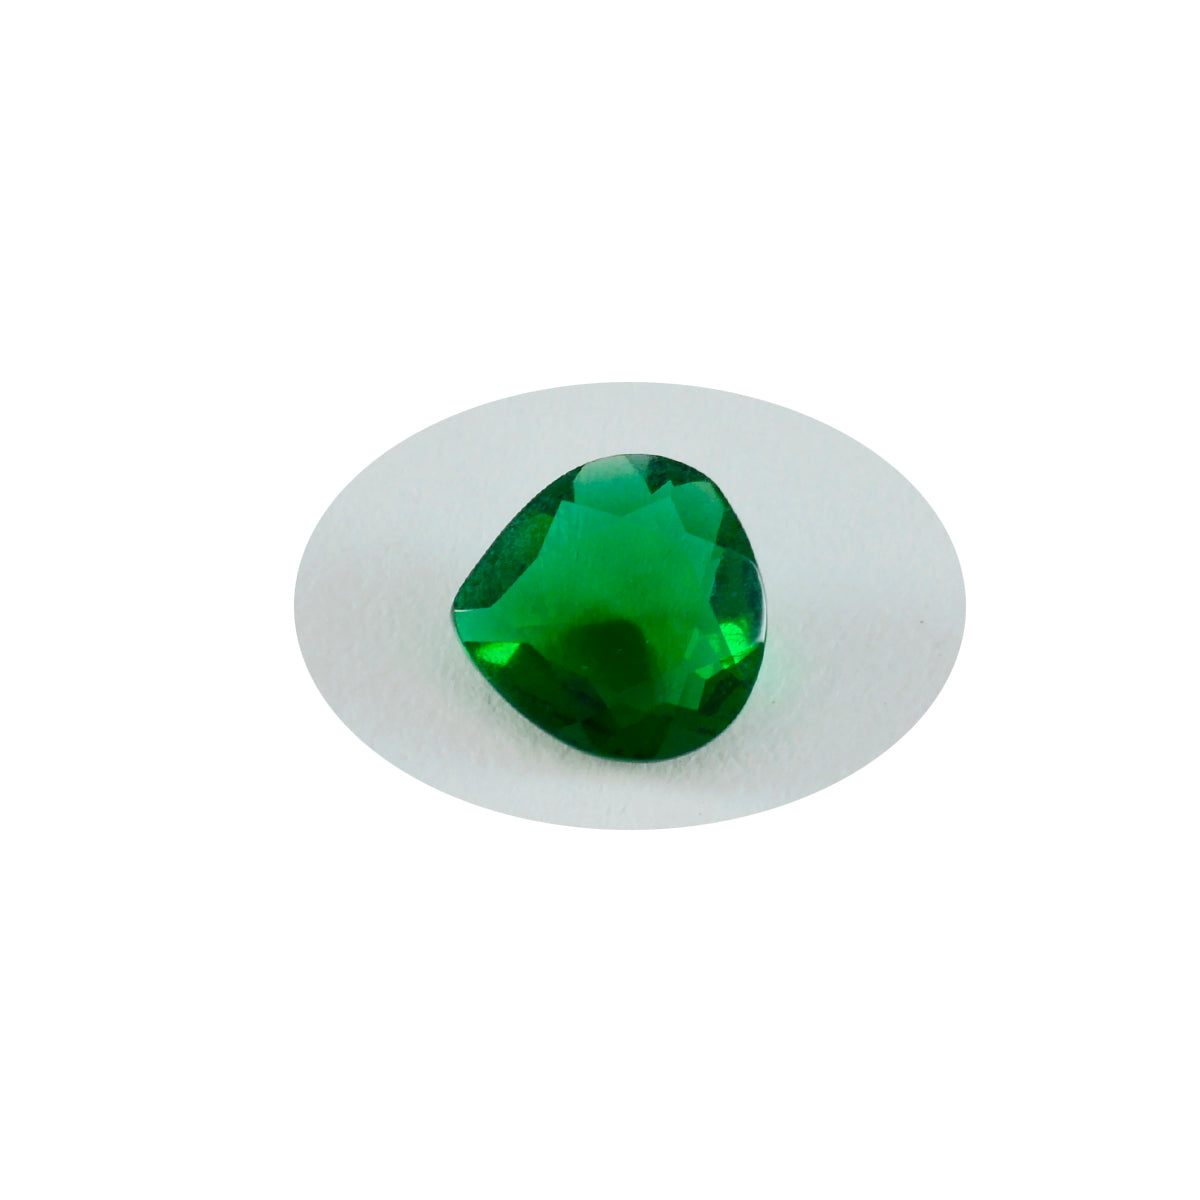 Riyogems 1 Stück grüner Smaragd, CZ, facettiert, 9 x 9 mm, Herzform, toller Qualitäts-Edelstein